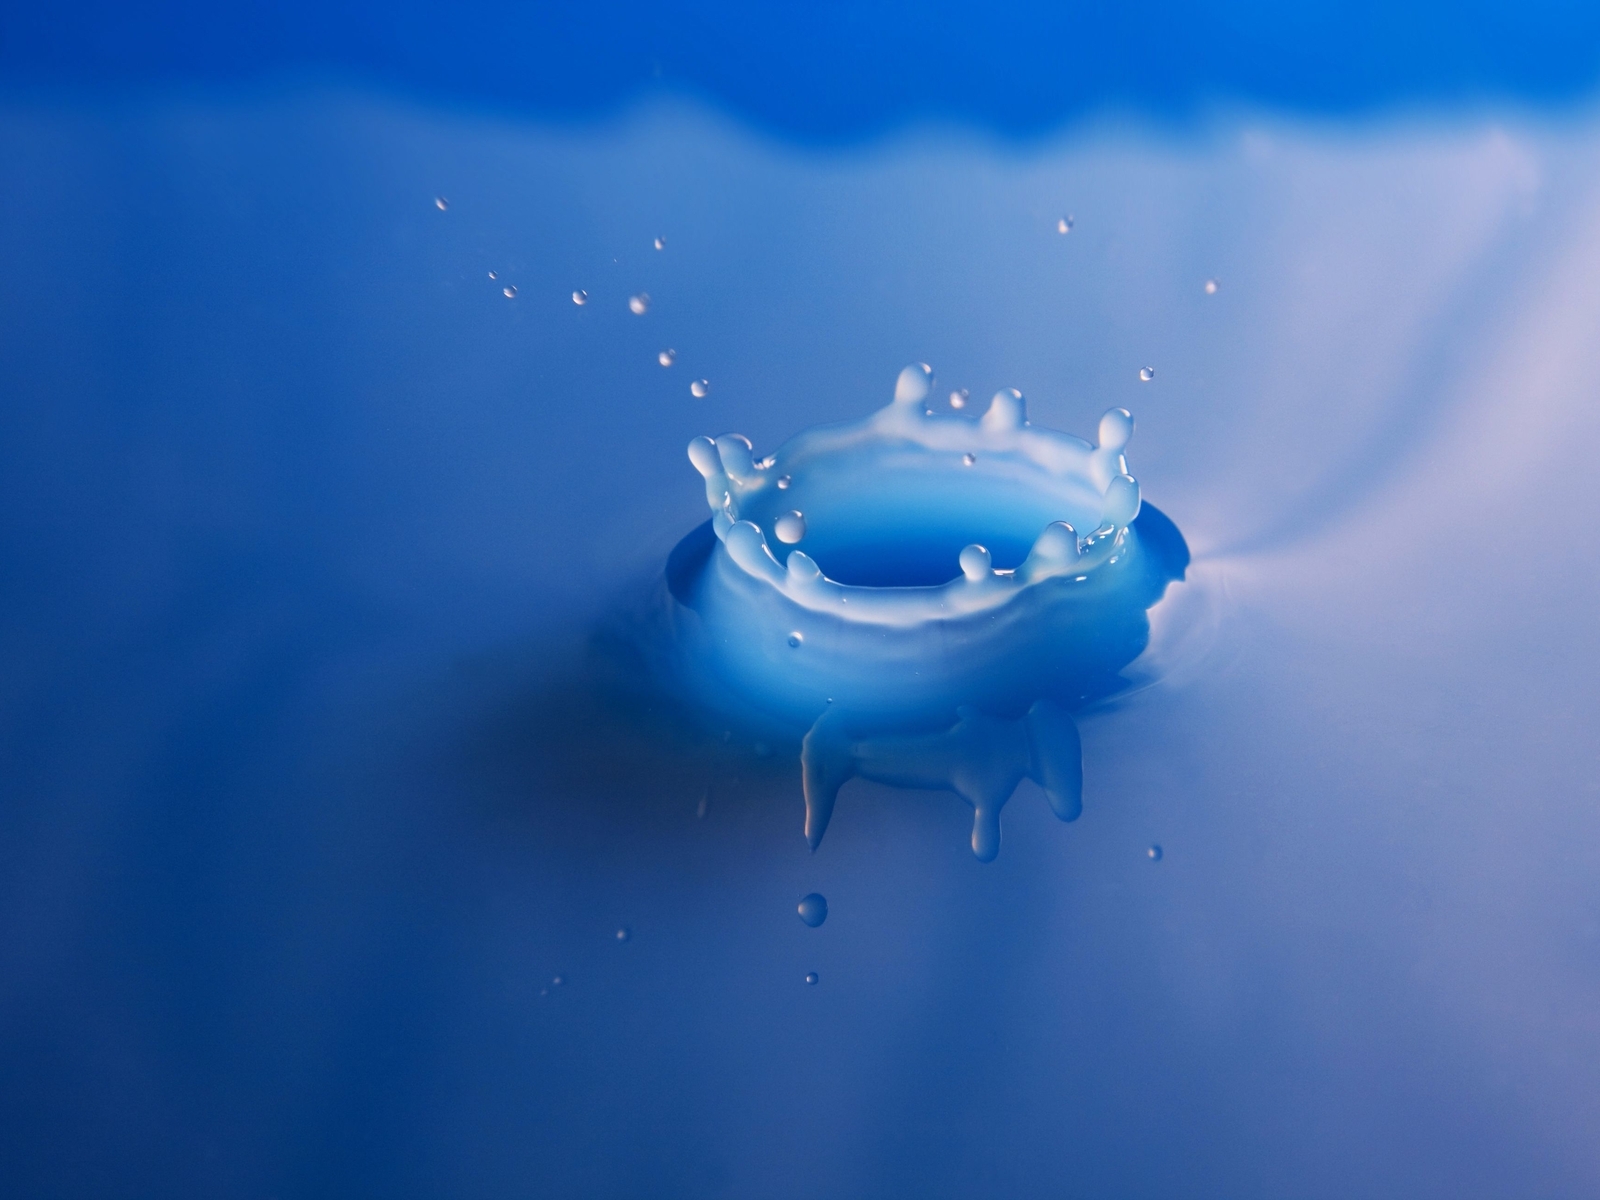 Image: Drops, spray, splash, water